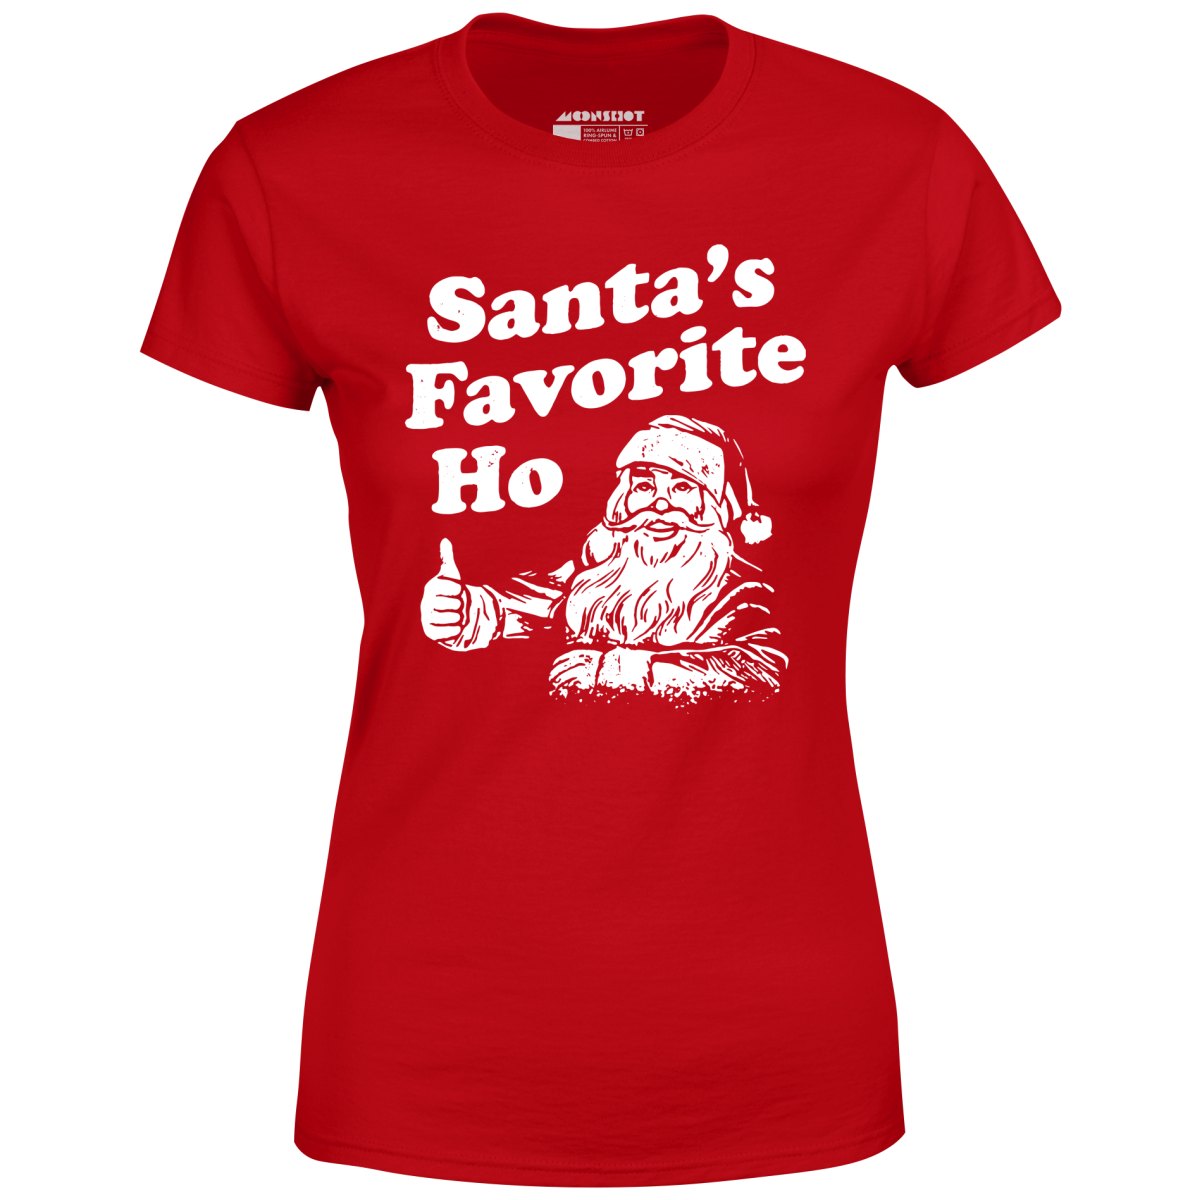 Santa's Favorite Ho - Women's T-Shirt